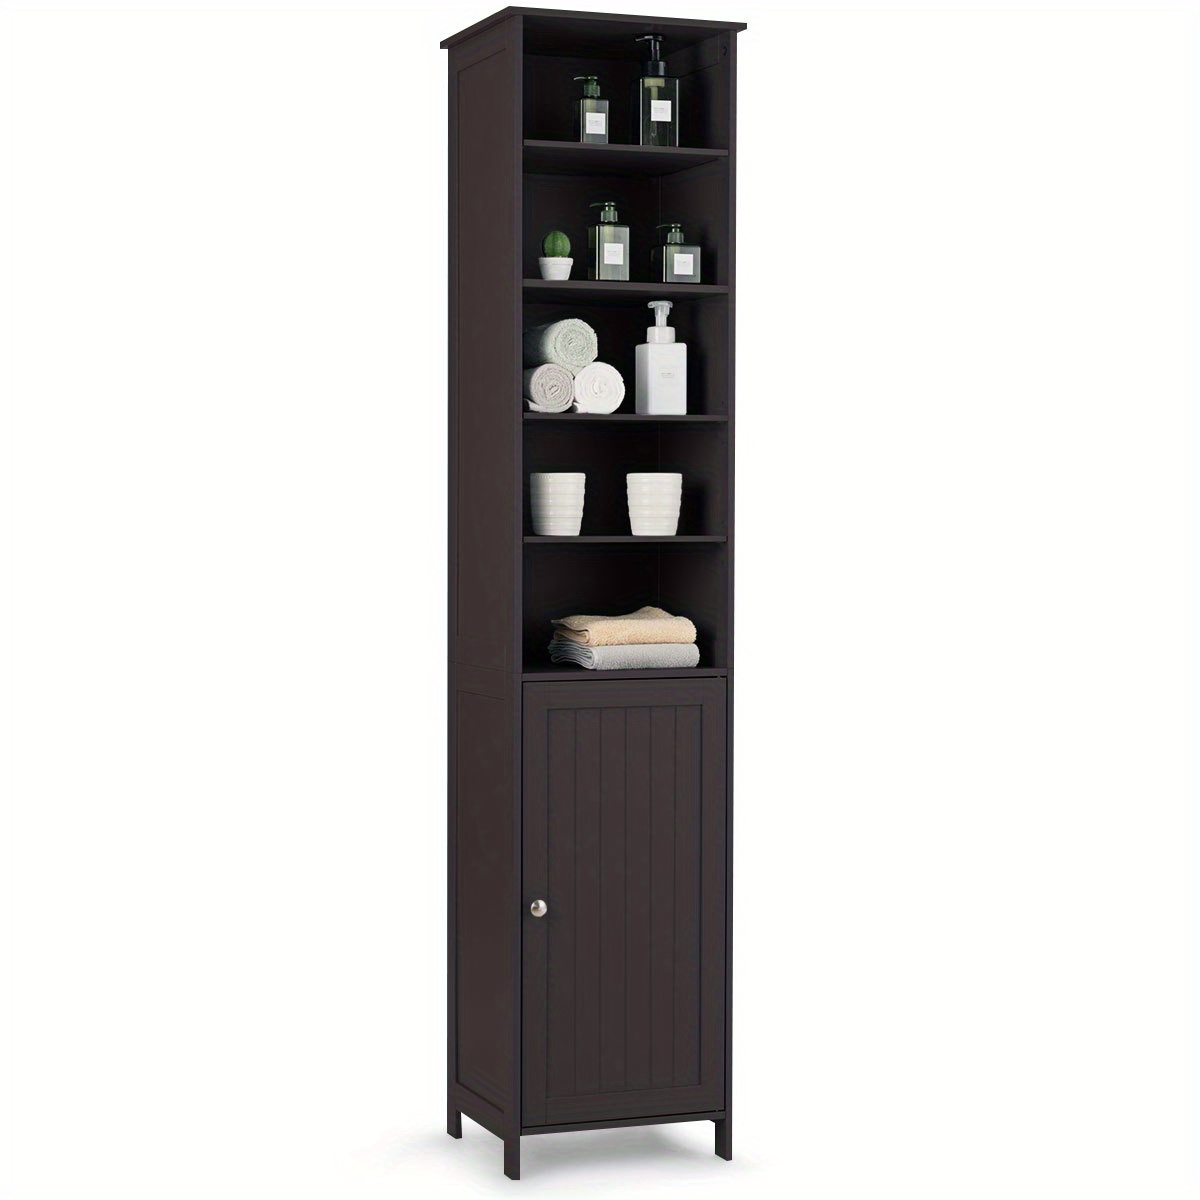 

Multigot 72" Bathroom Tall Floor Storage Cabinet Freestand Shelving Display Brown